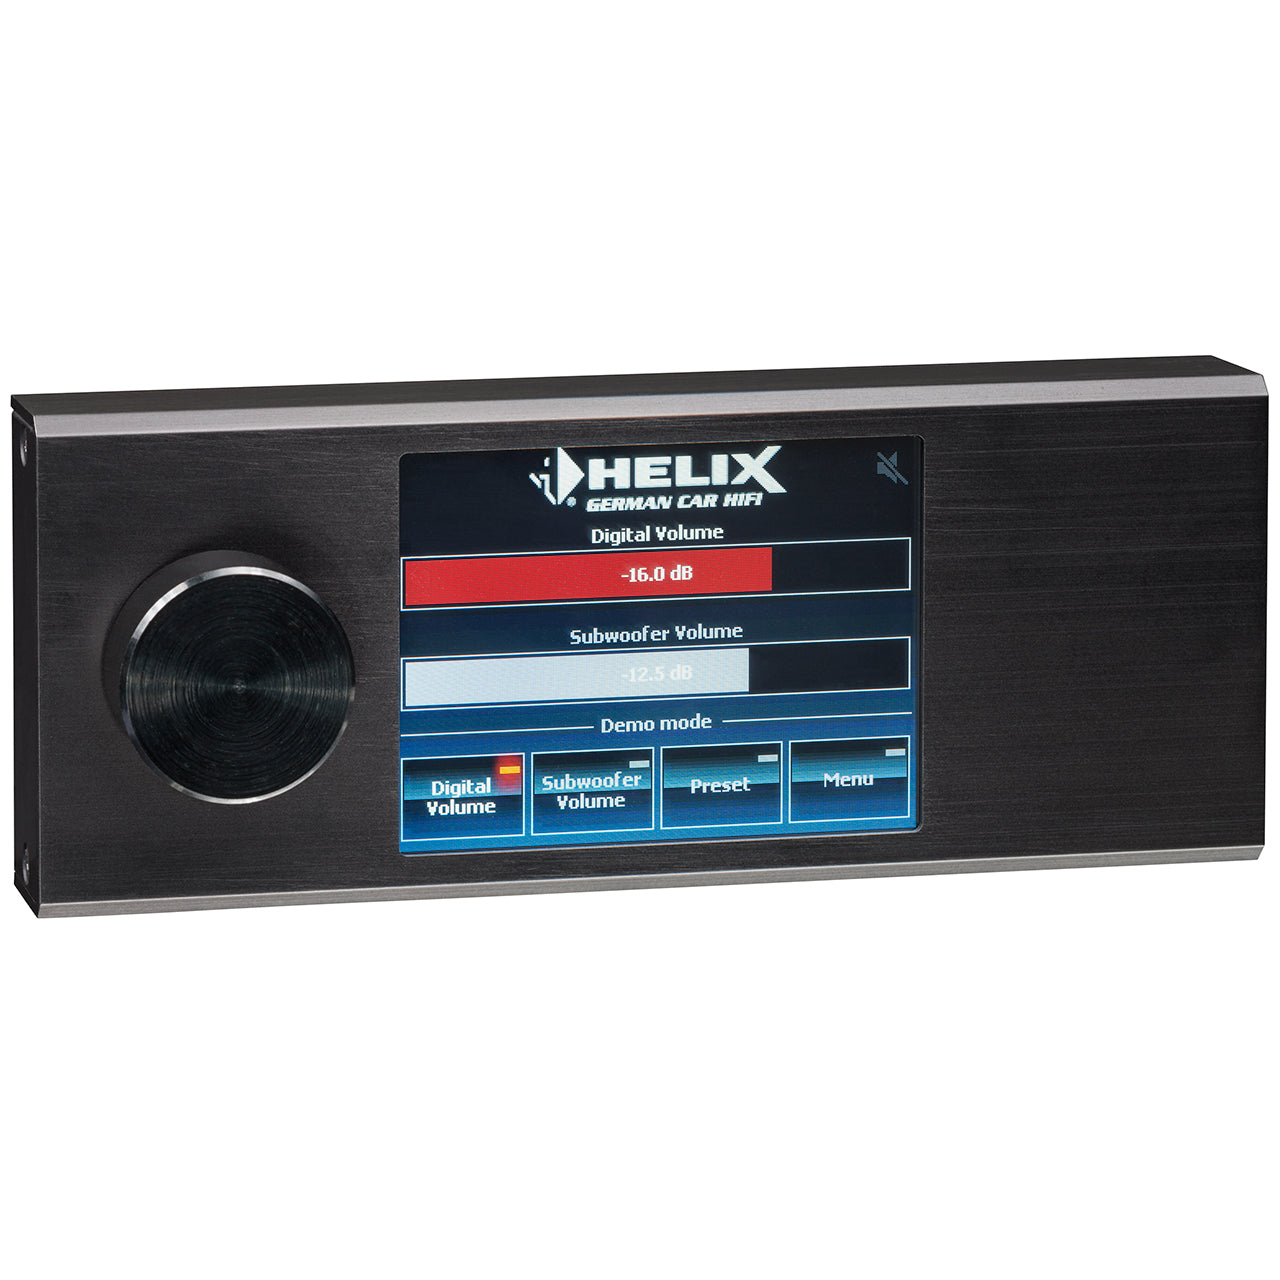 HELIX DIRECTOR remote control